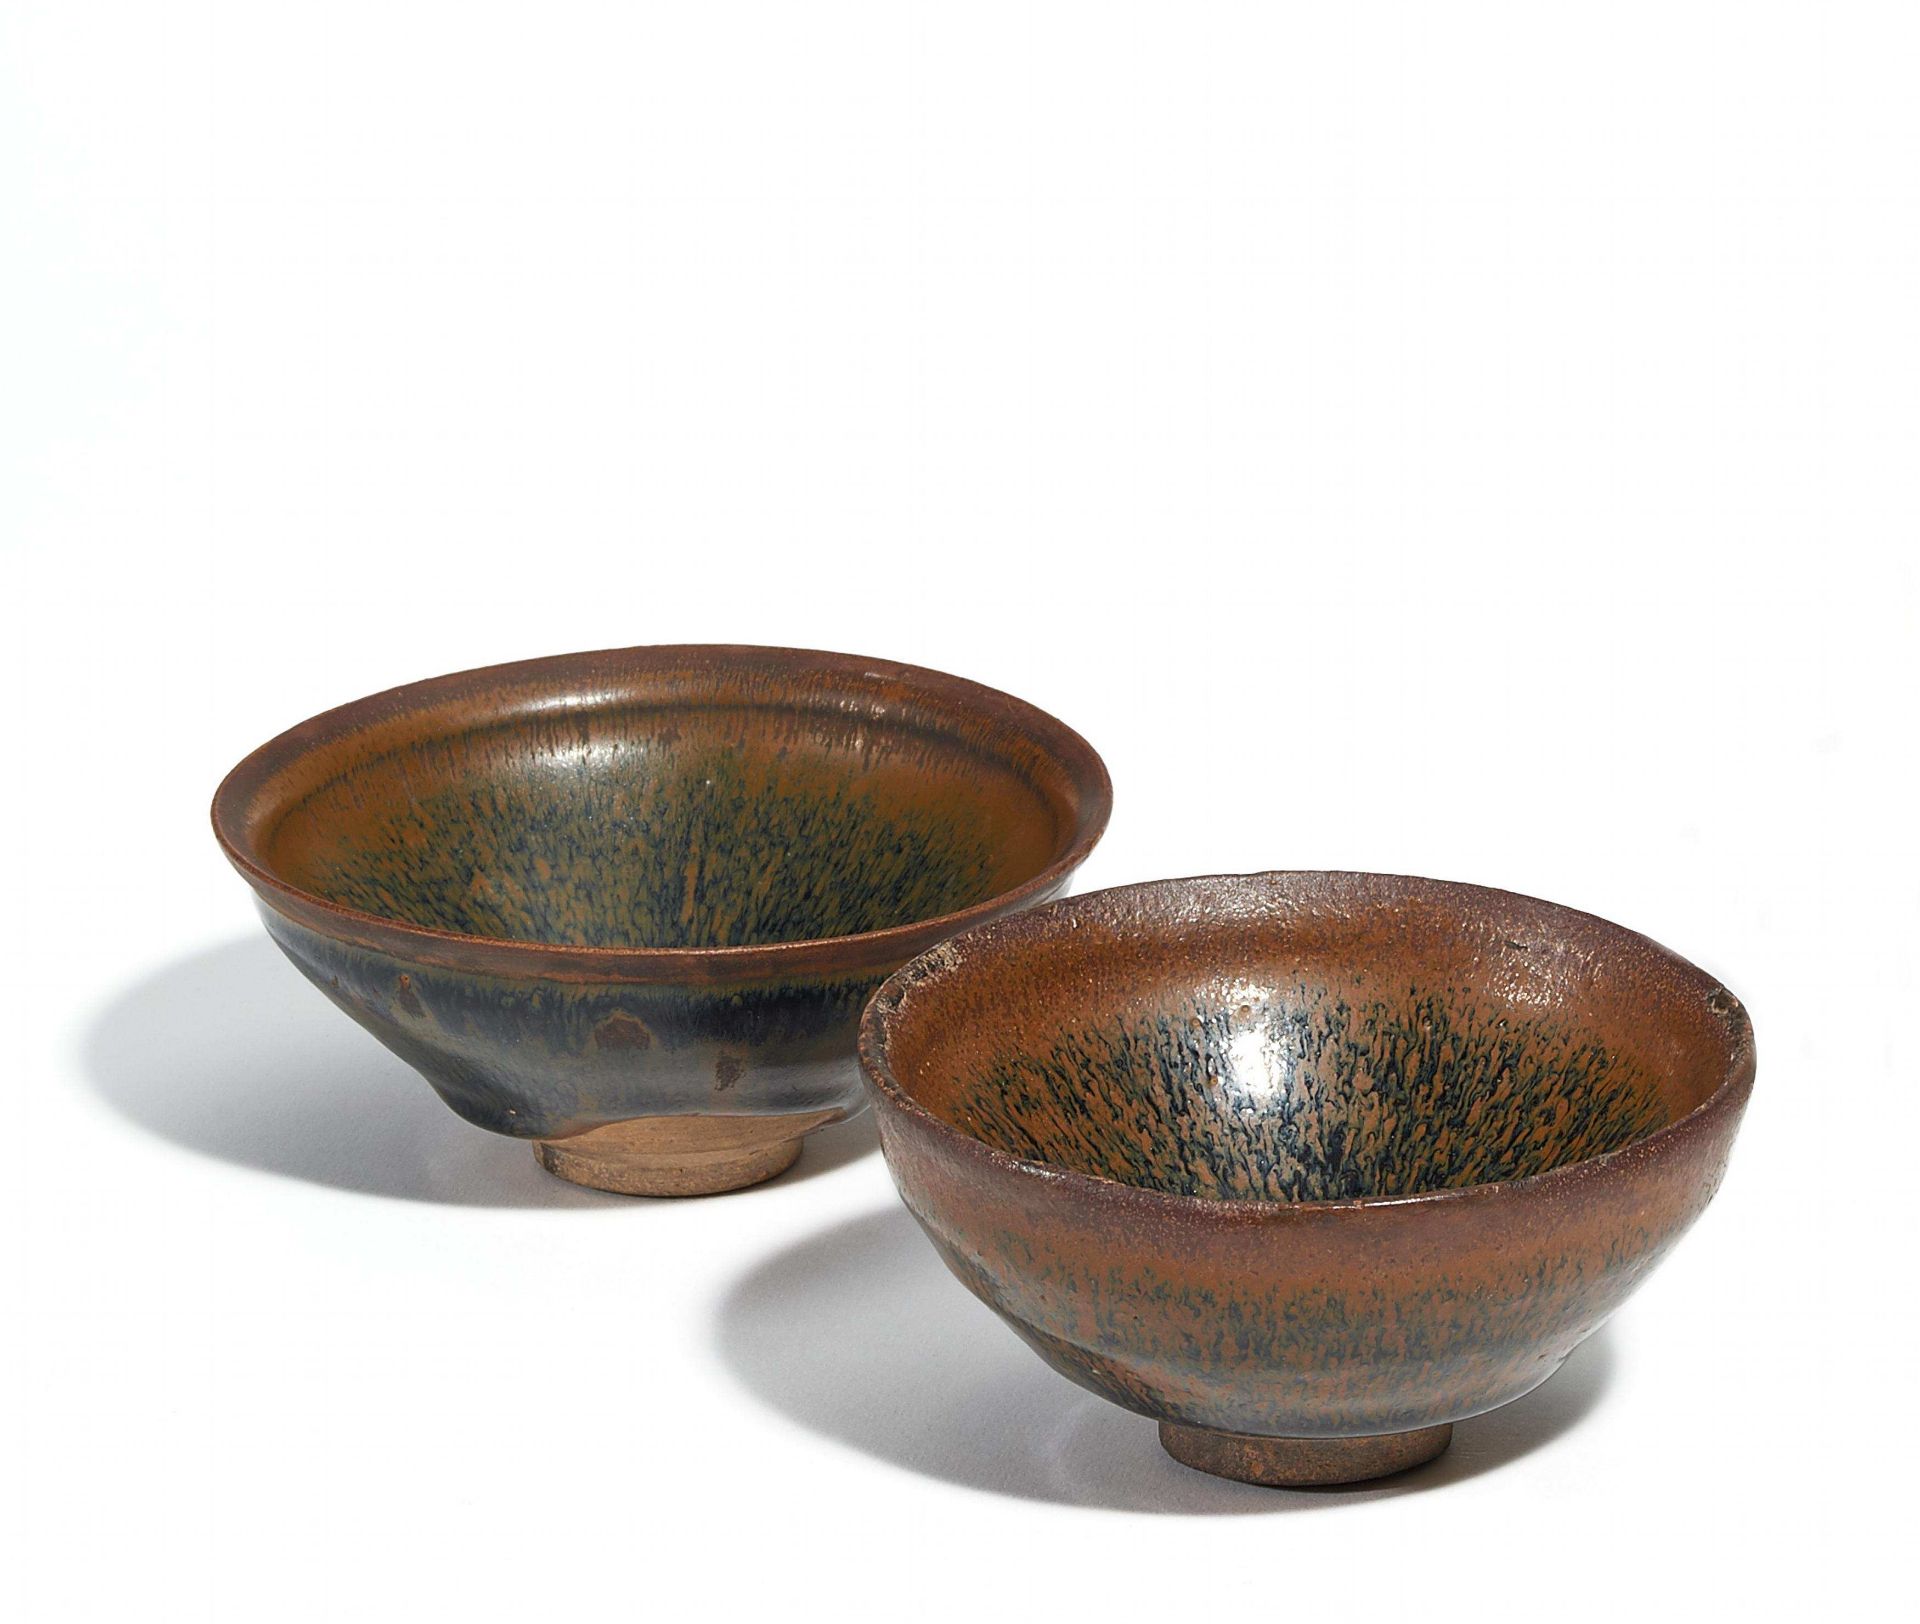 TWO JIANYAO TEA BOWLS. China. Probably Song-Dynasty (960-1279). Ceramic fired at high temperature